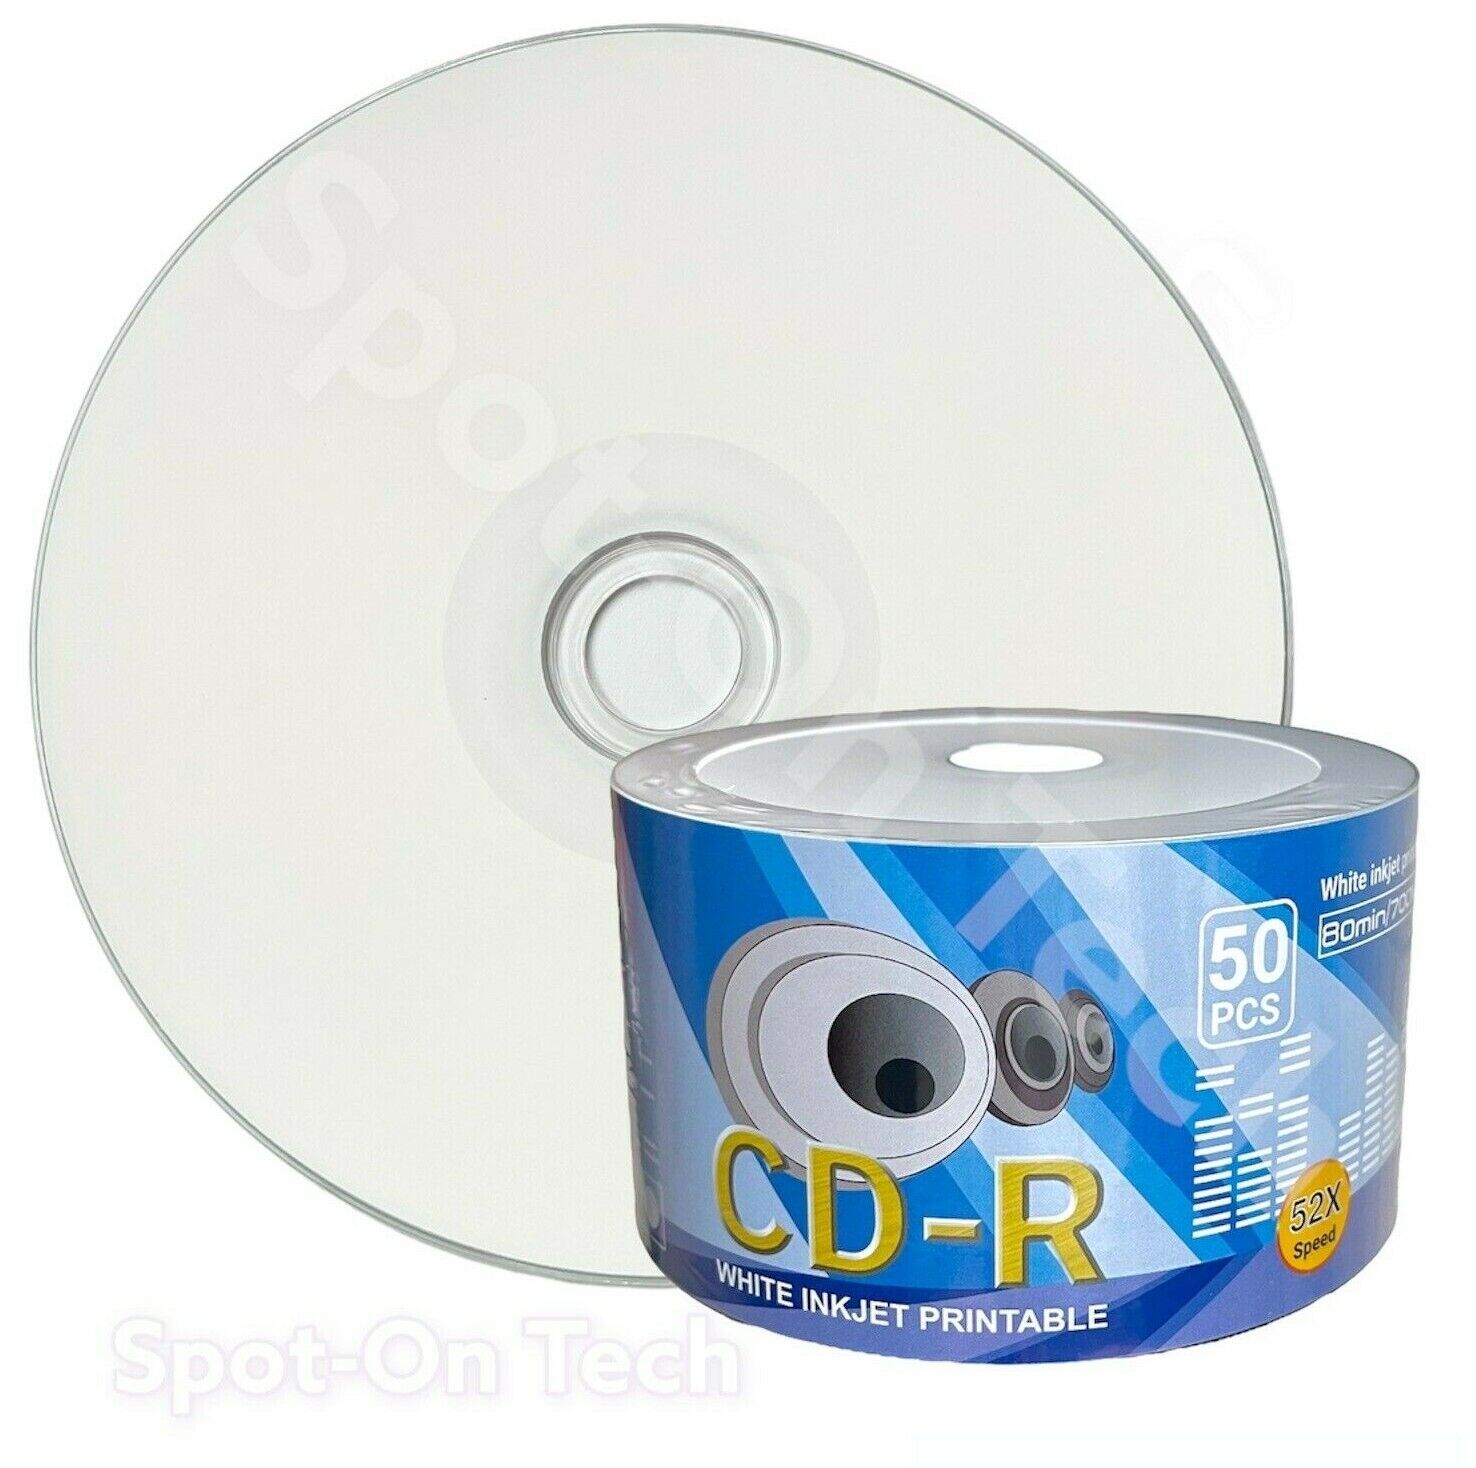 25 LSK CD CD-R White Inkjet Print - Taiwan - 80Min/700MB/52x in Sleeves hp